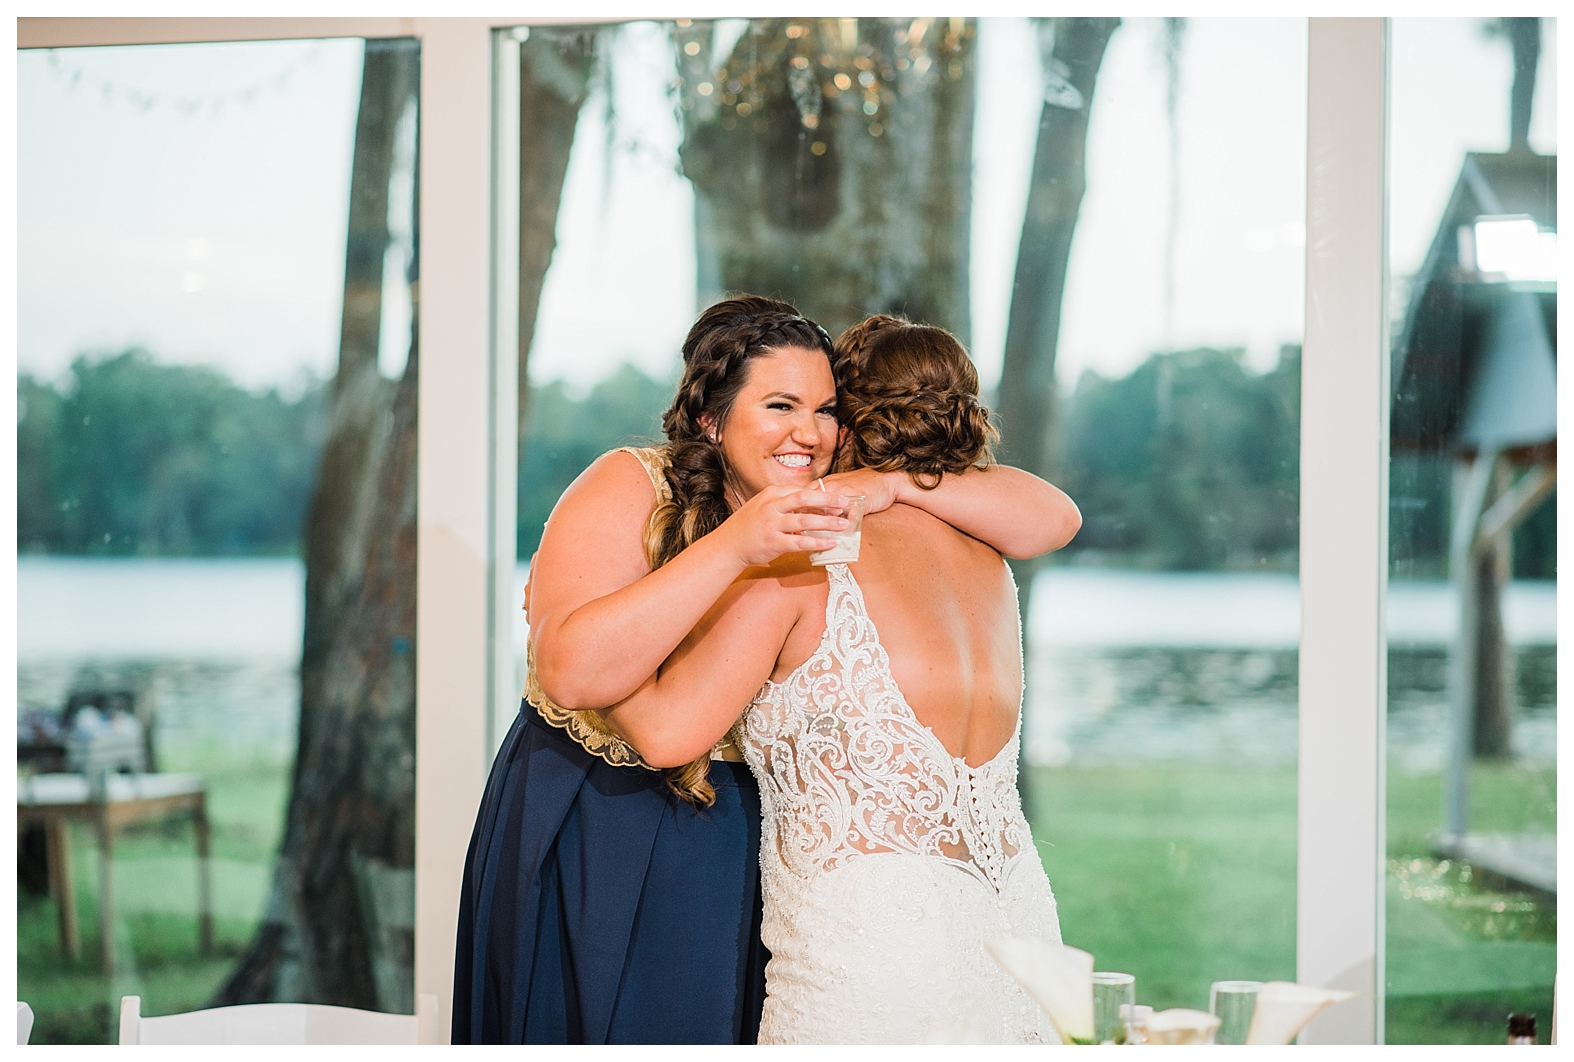 Toasting Photos - Sara and Chad - Tampa Wedding Photographer